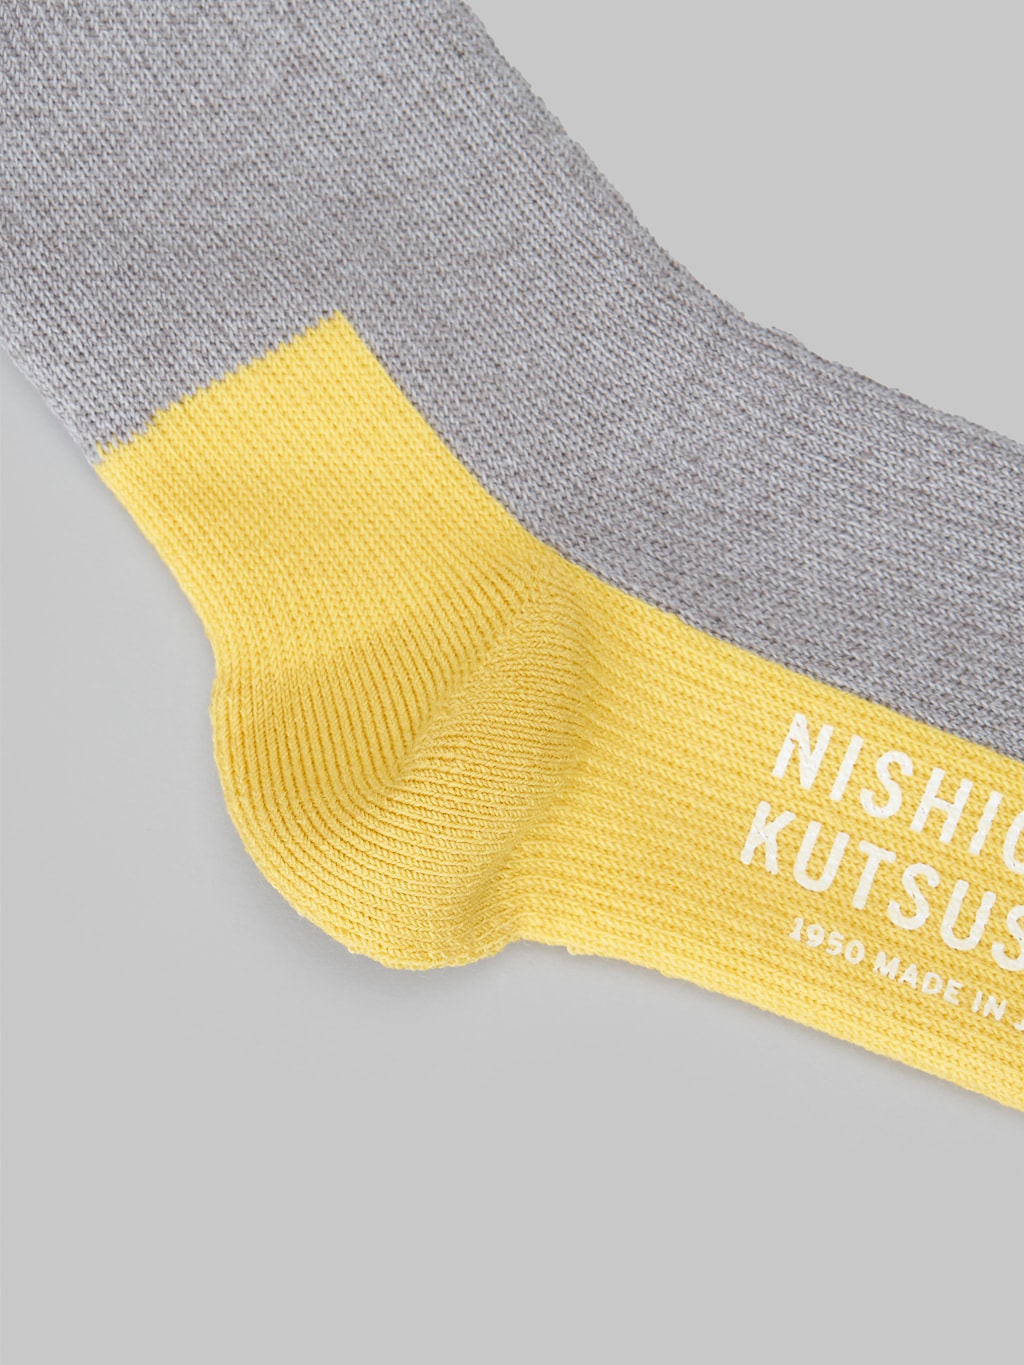 Nishiguchi Kutsushita Wool Pile Walk Socks light grey reinforced heel